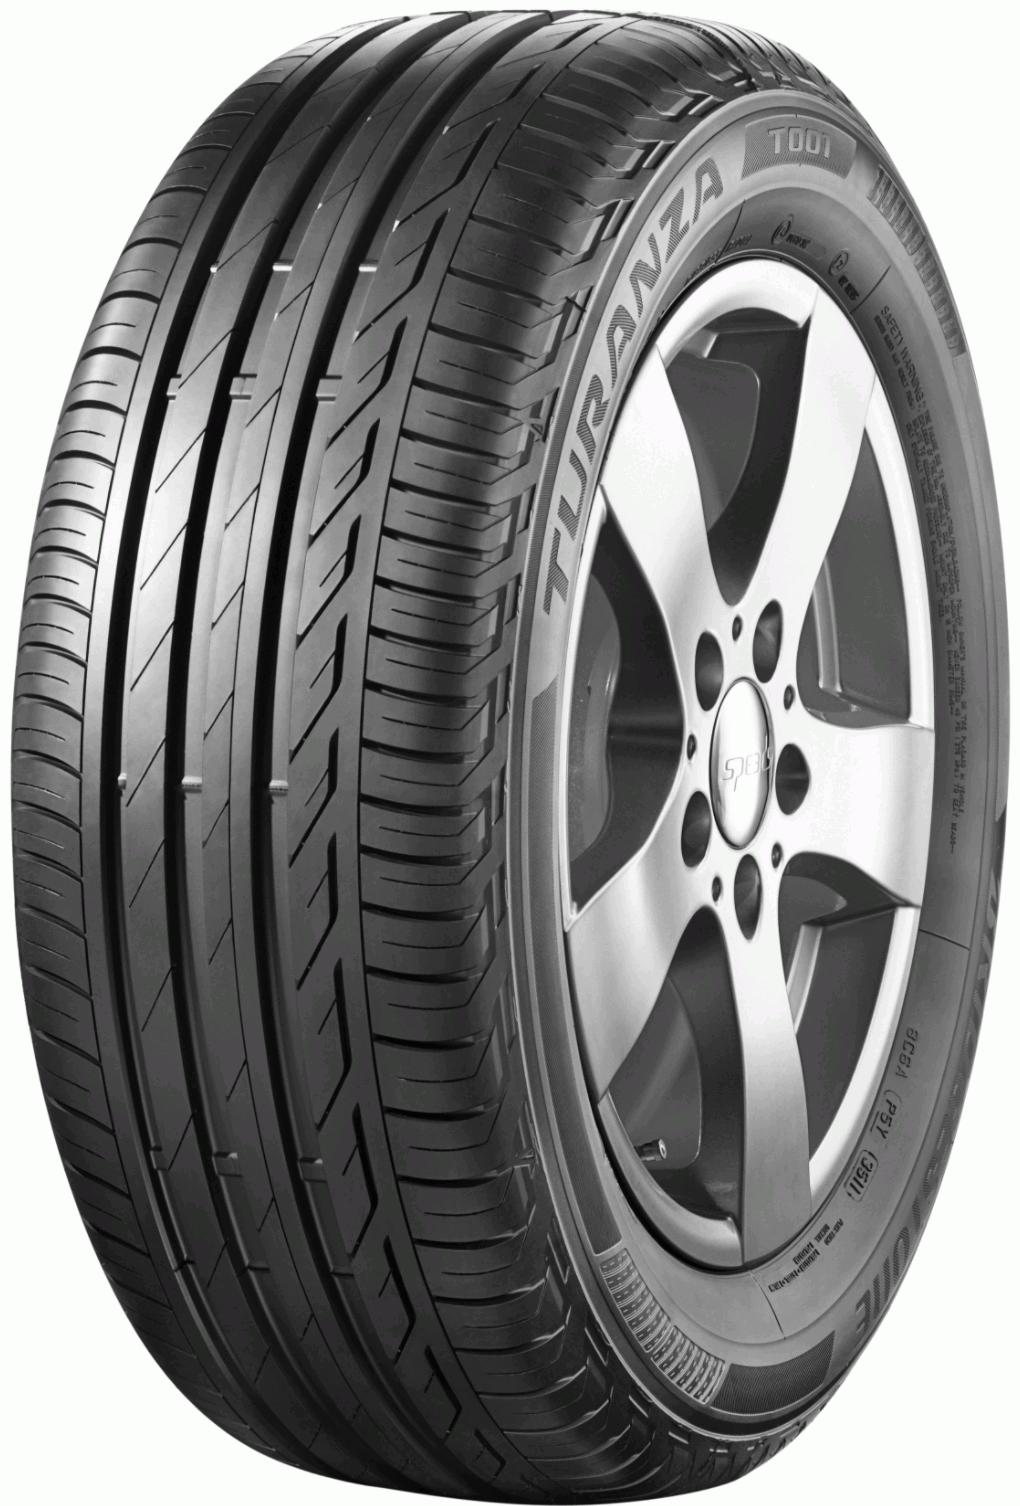 Bridgestone Turanza T001 Evo Tyre Reviews And Tests